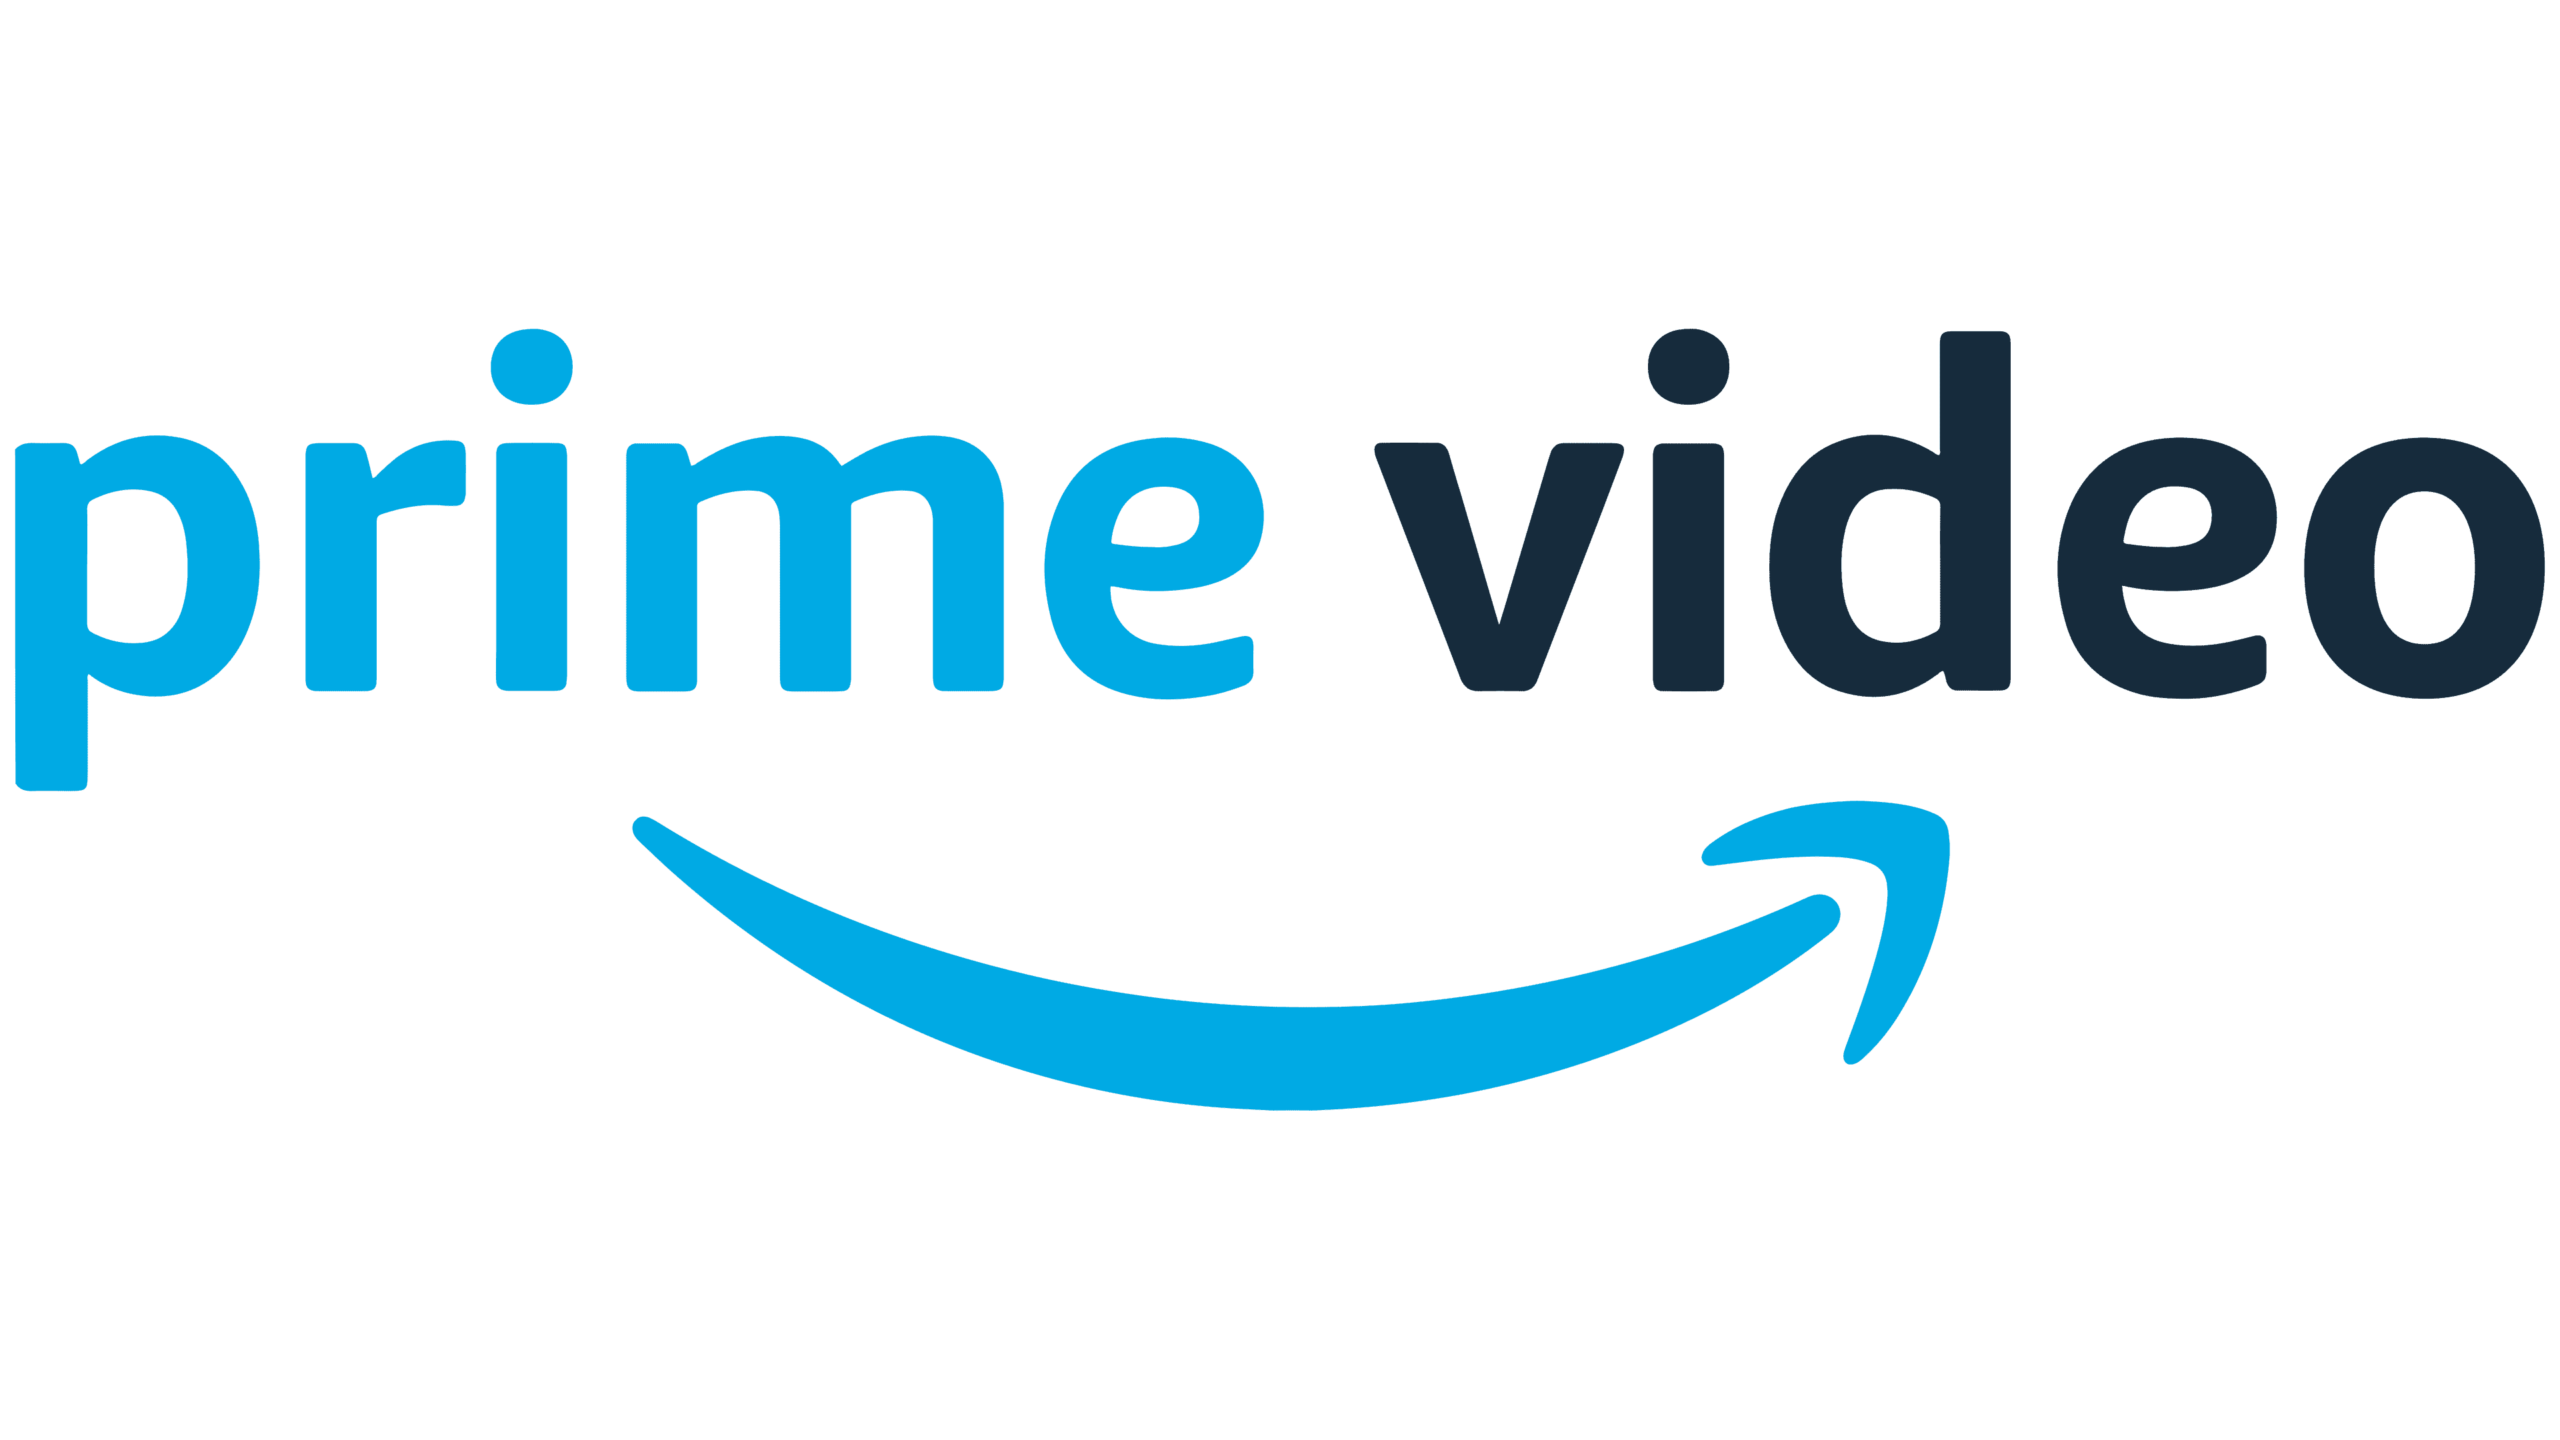 Video Perdana Amazon